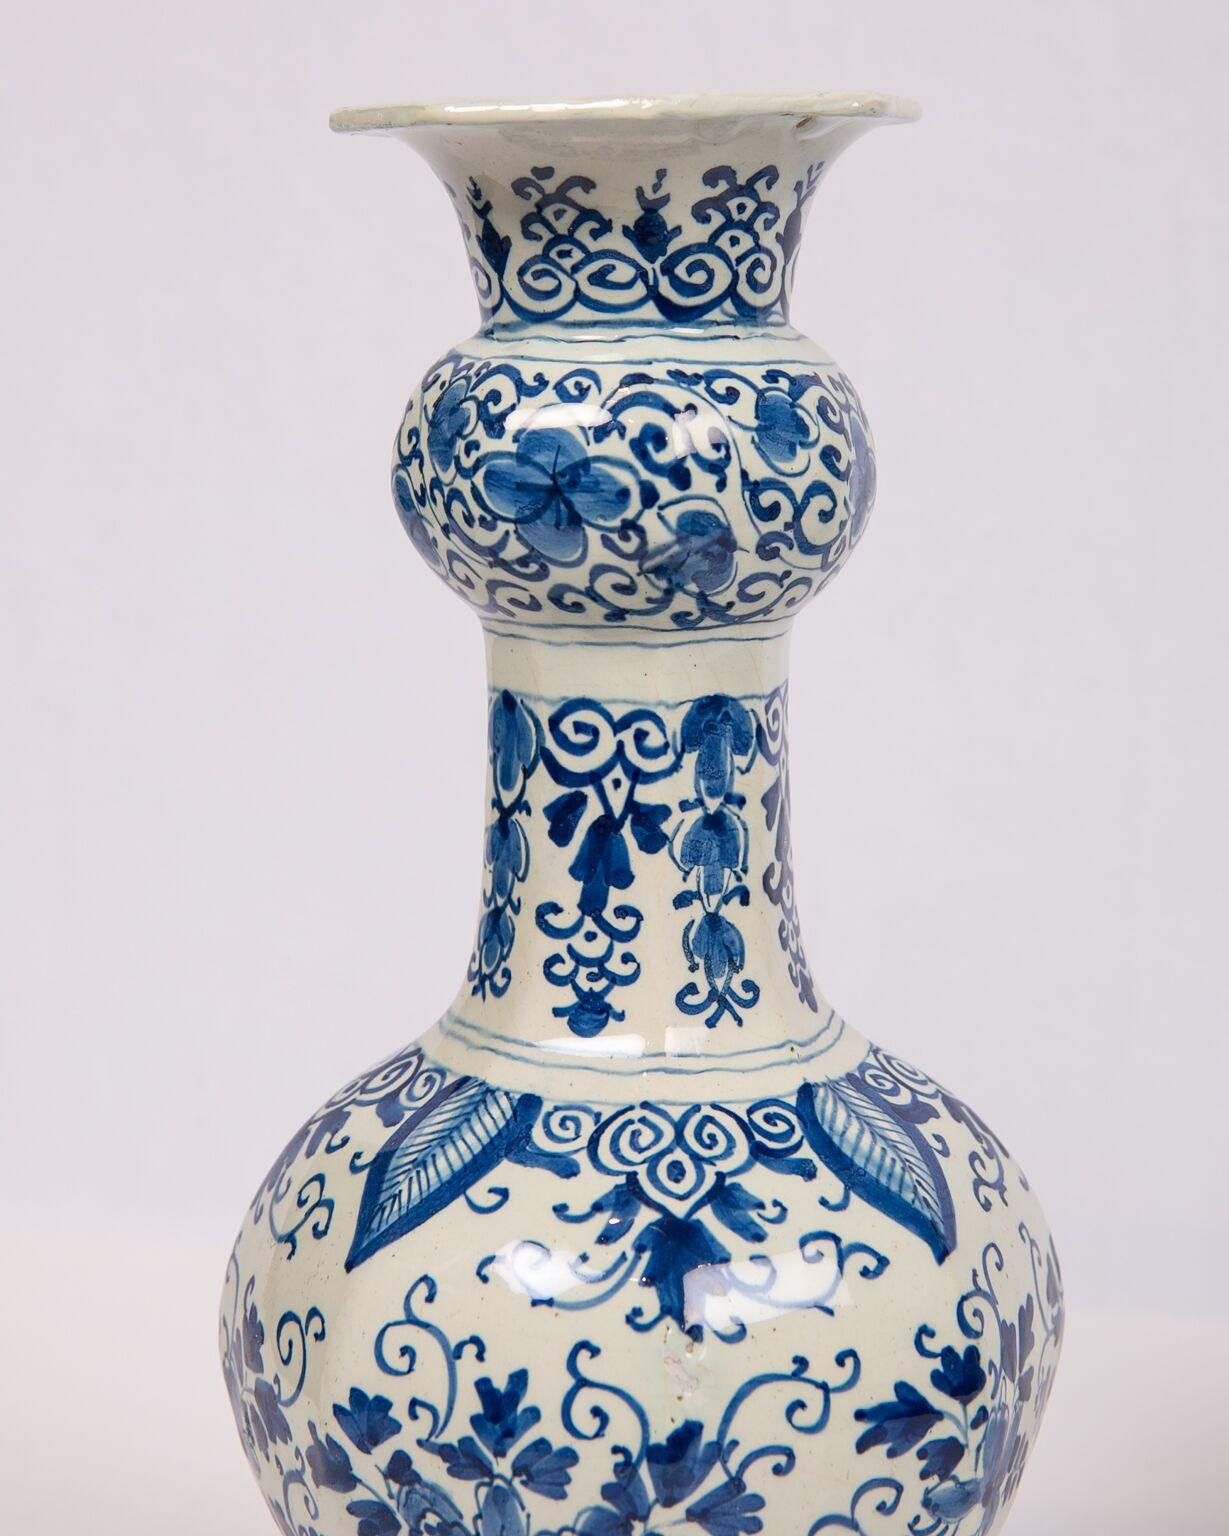 Dutch Delft Blue and White Vases, 18th Century